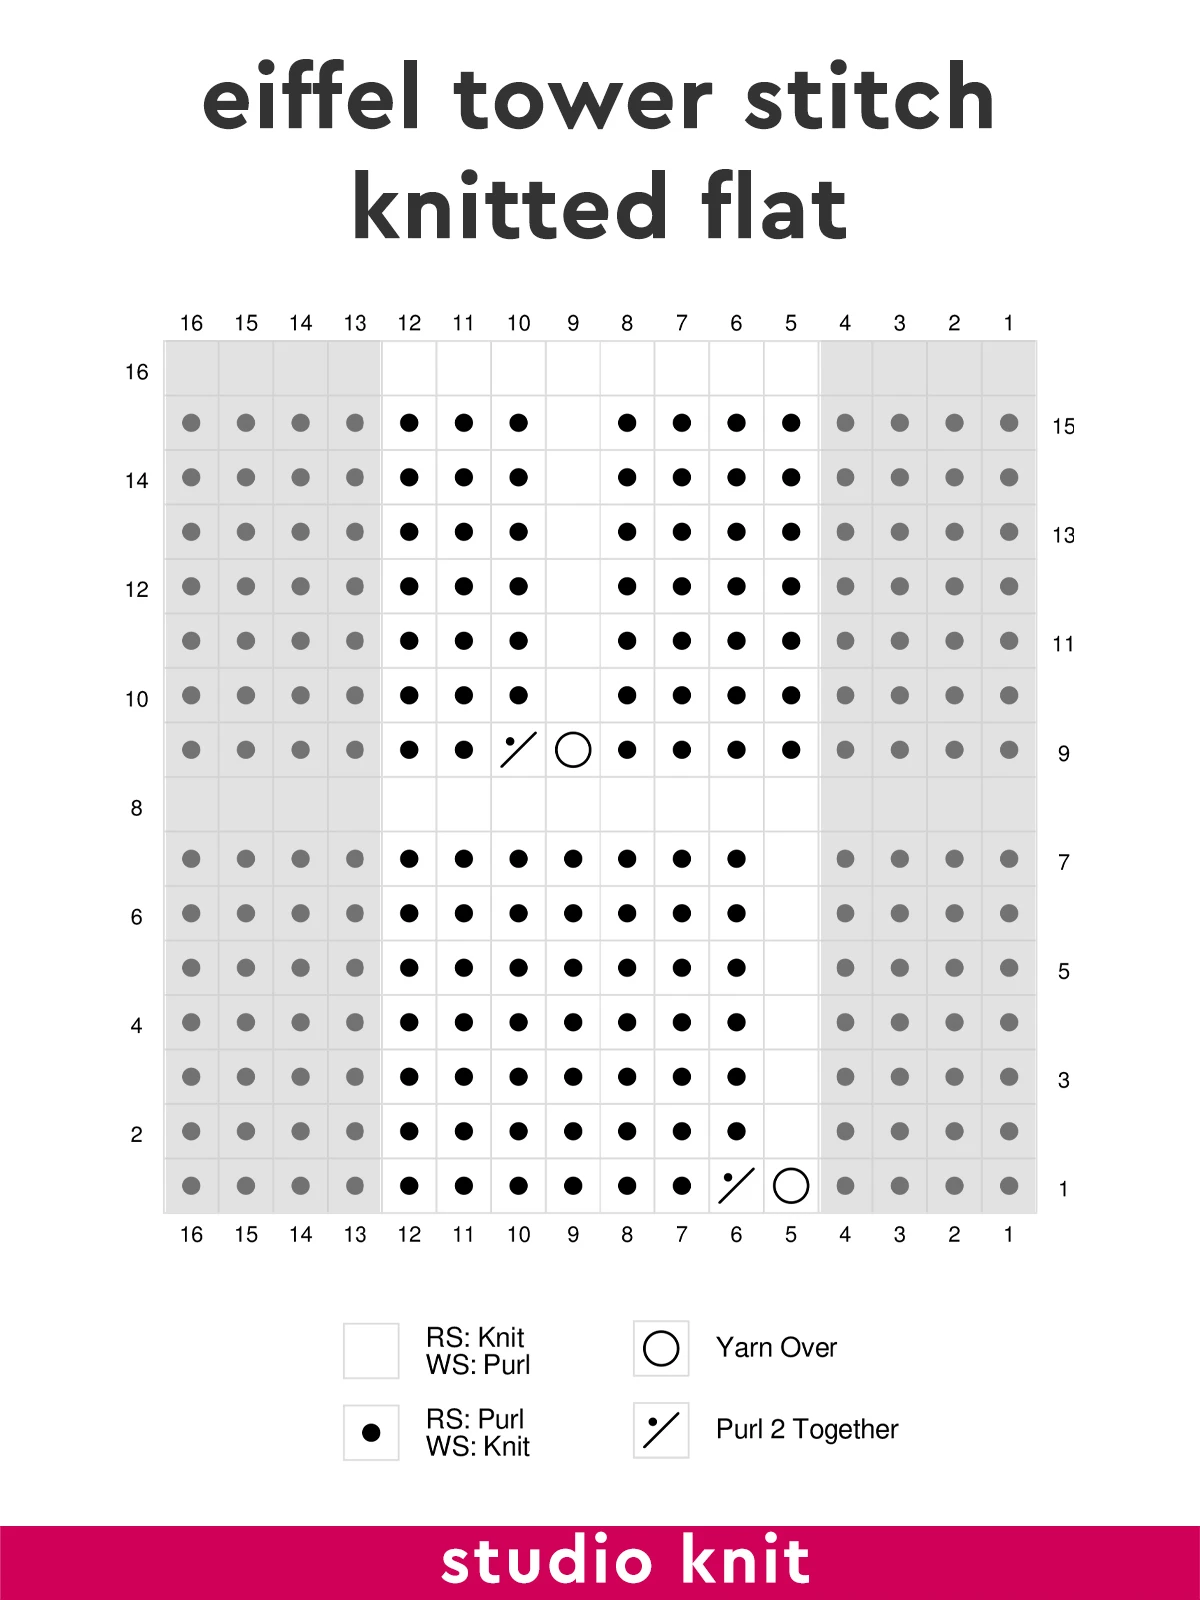 Knitting chart of the Eiffel Tower Stitch knitted flat by Studio Knit.